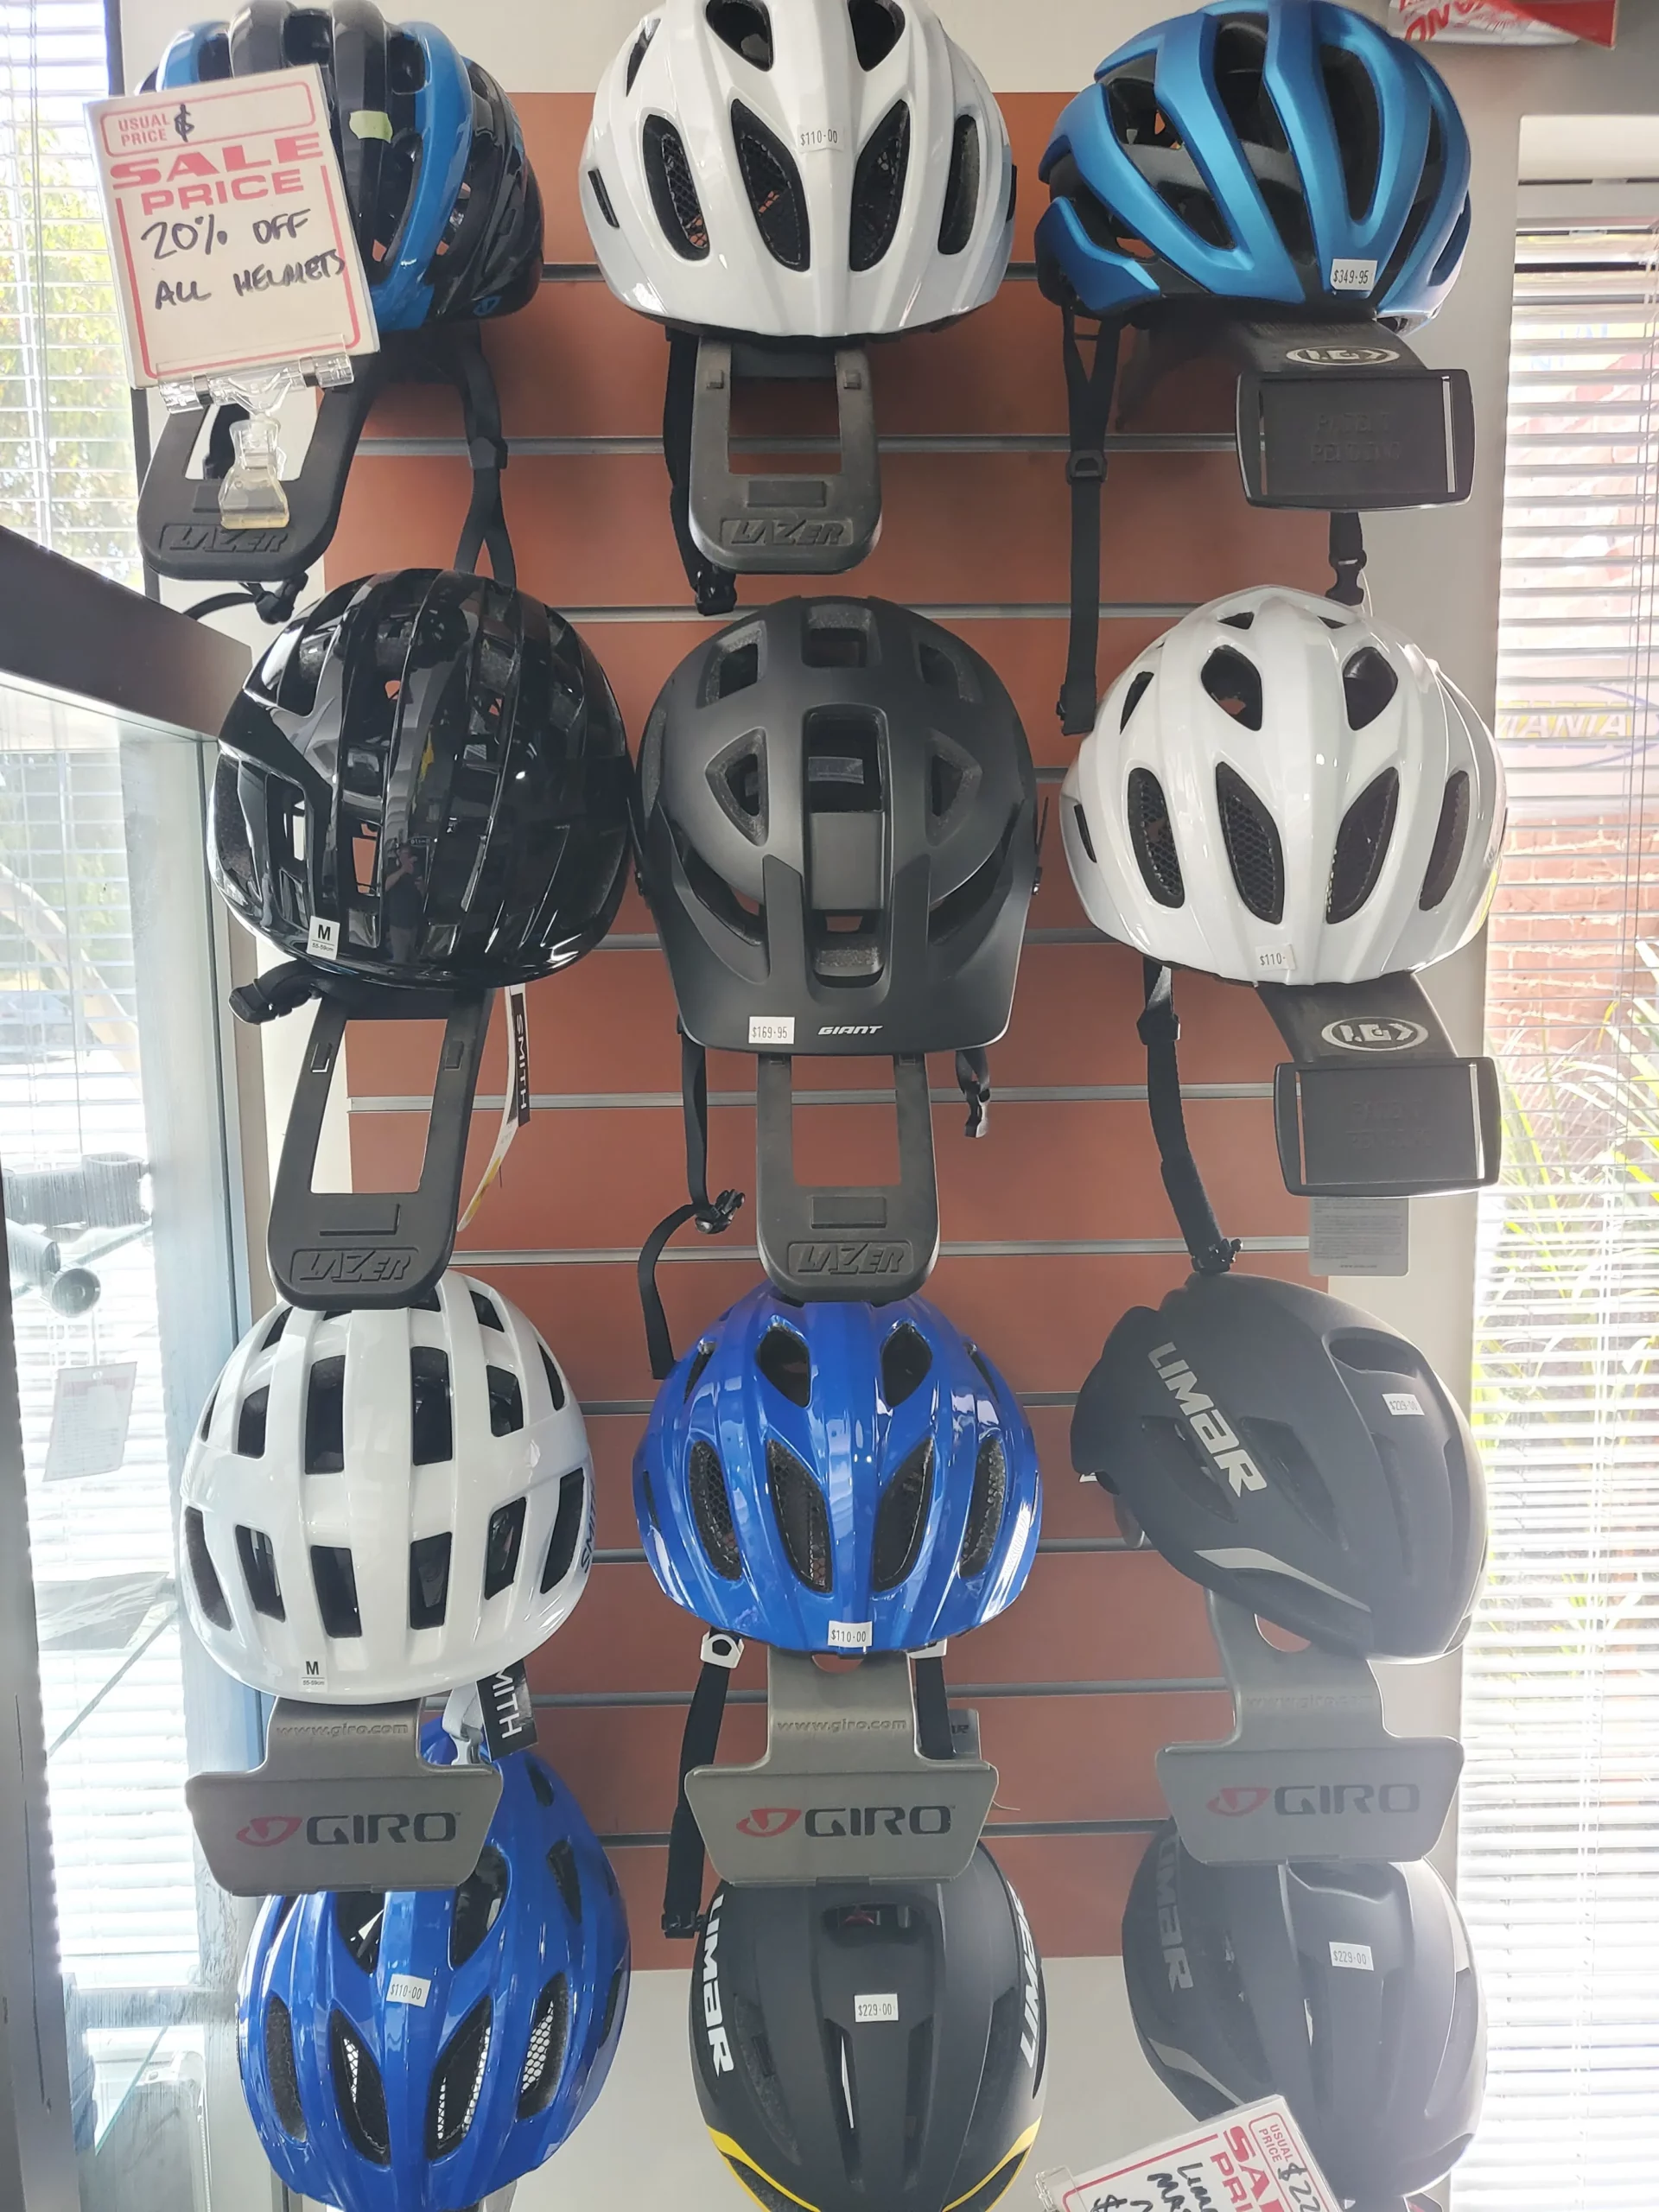 Giro cycling helmet retail wall display.